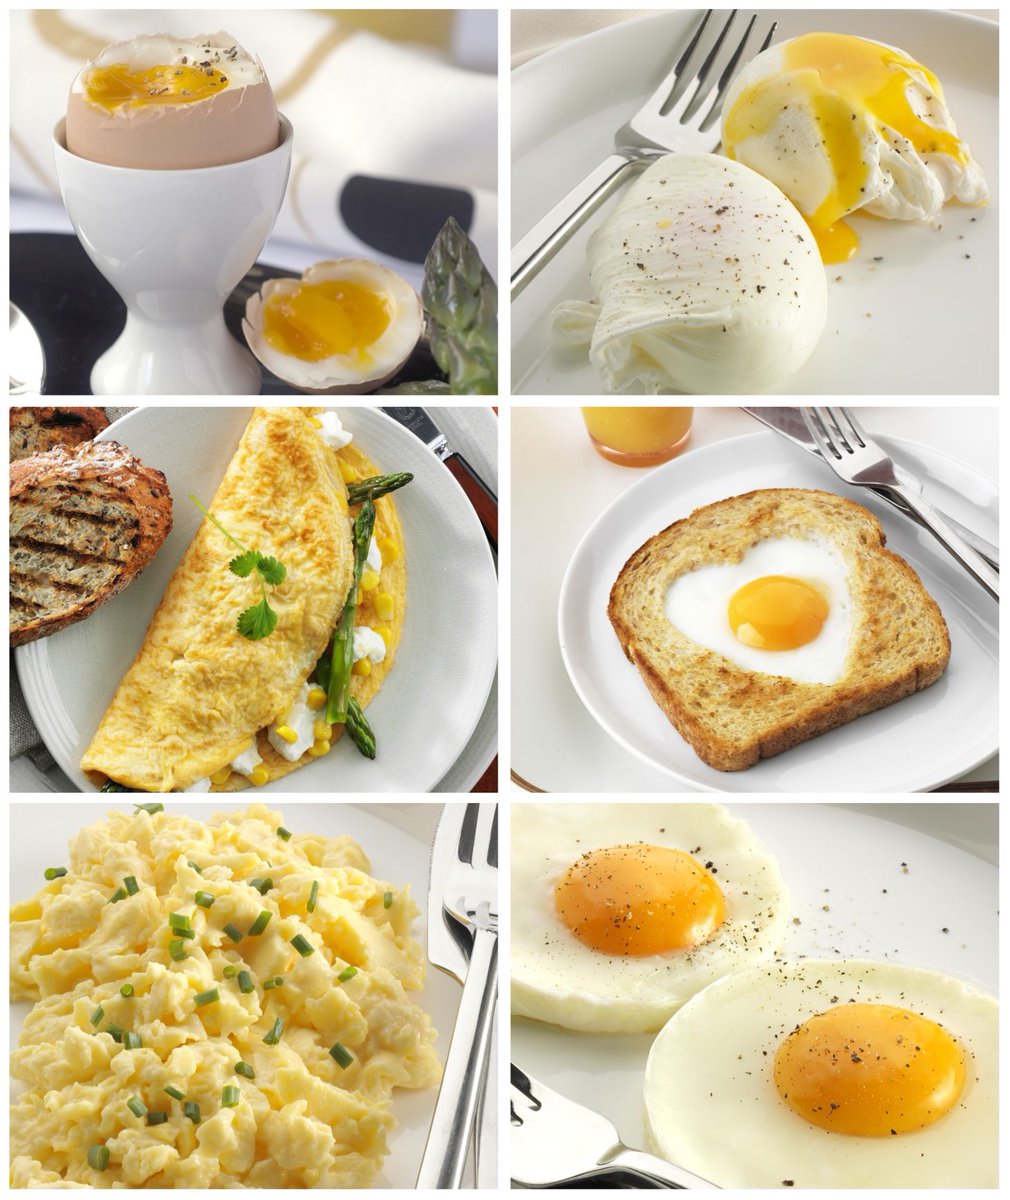 Рецепт на завтрак быстро и вкусно с фото